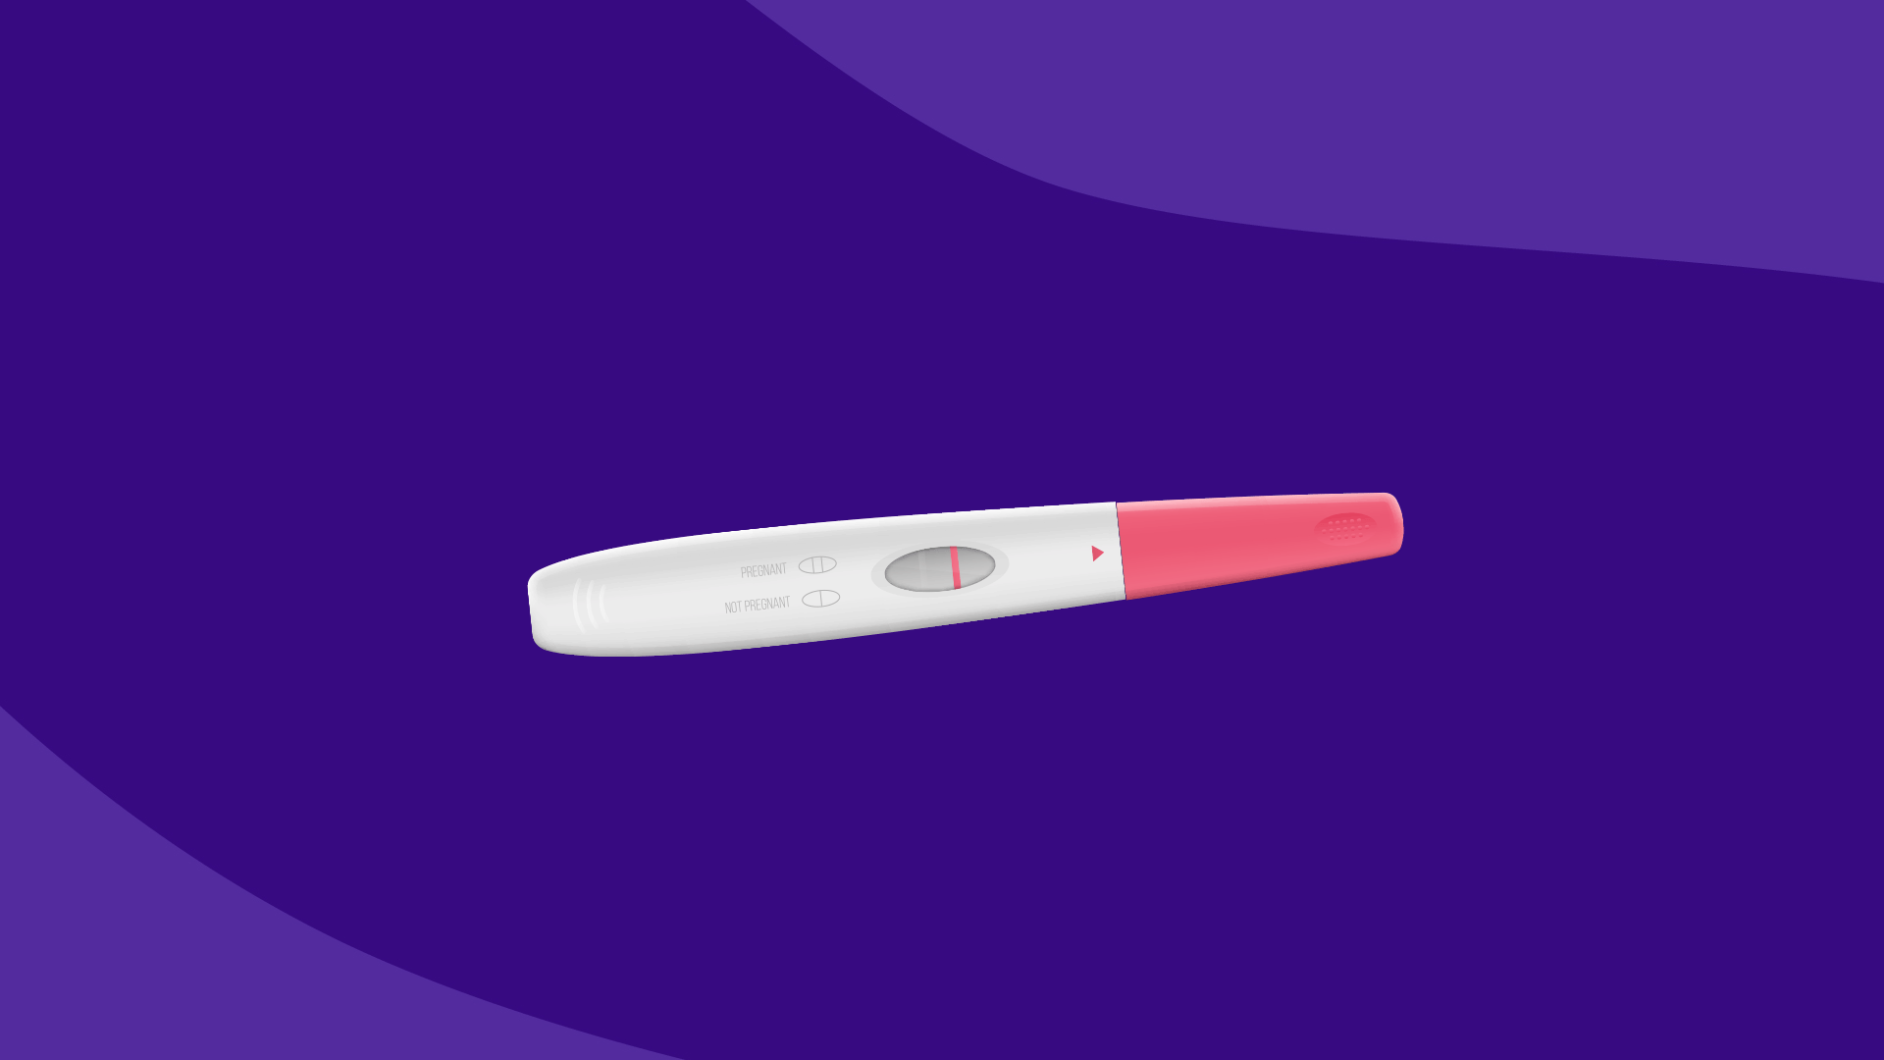 test stick - fertility test